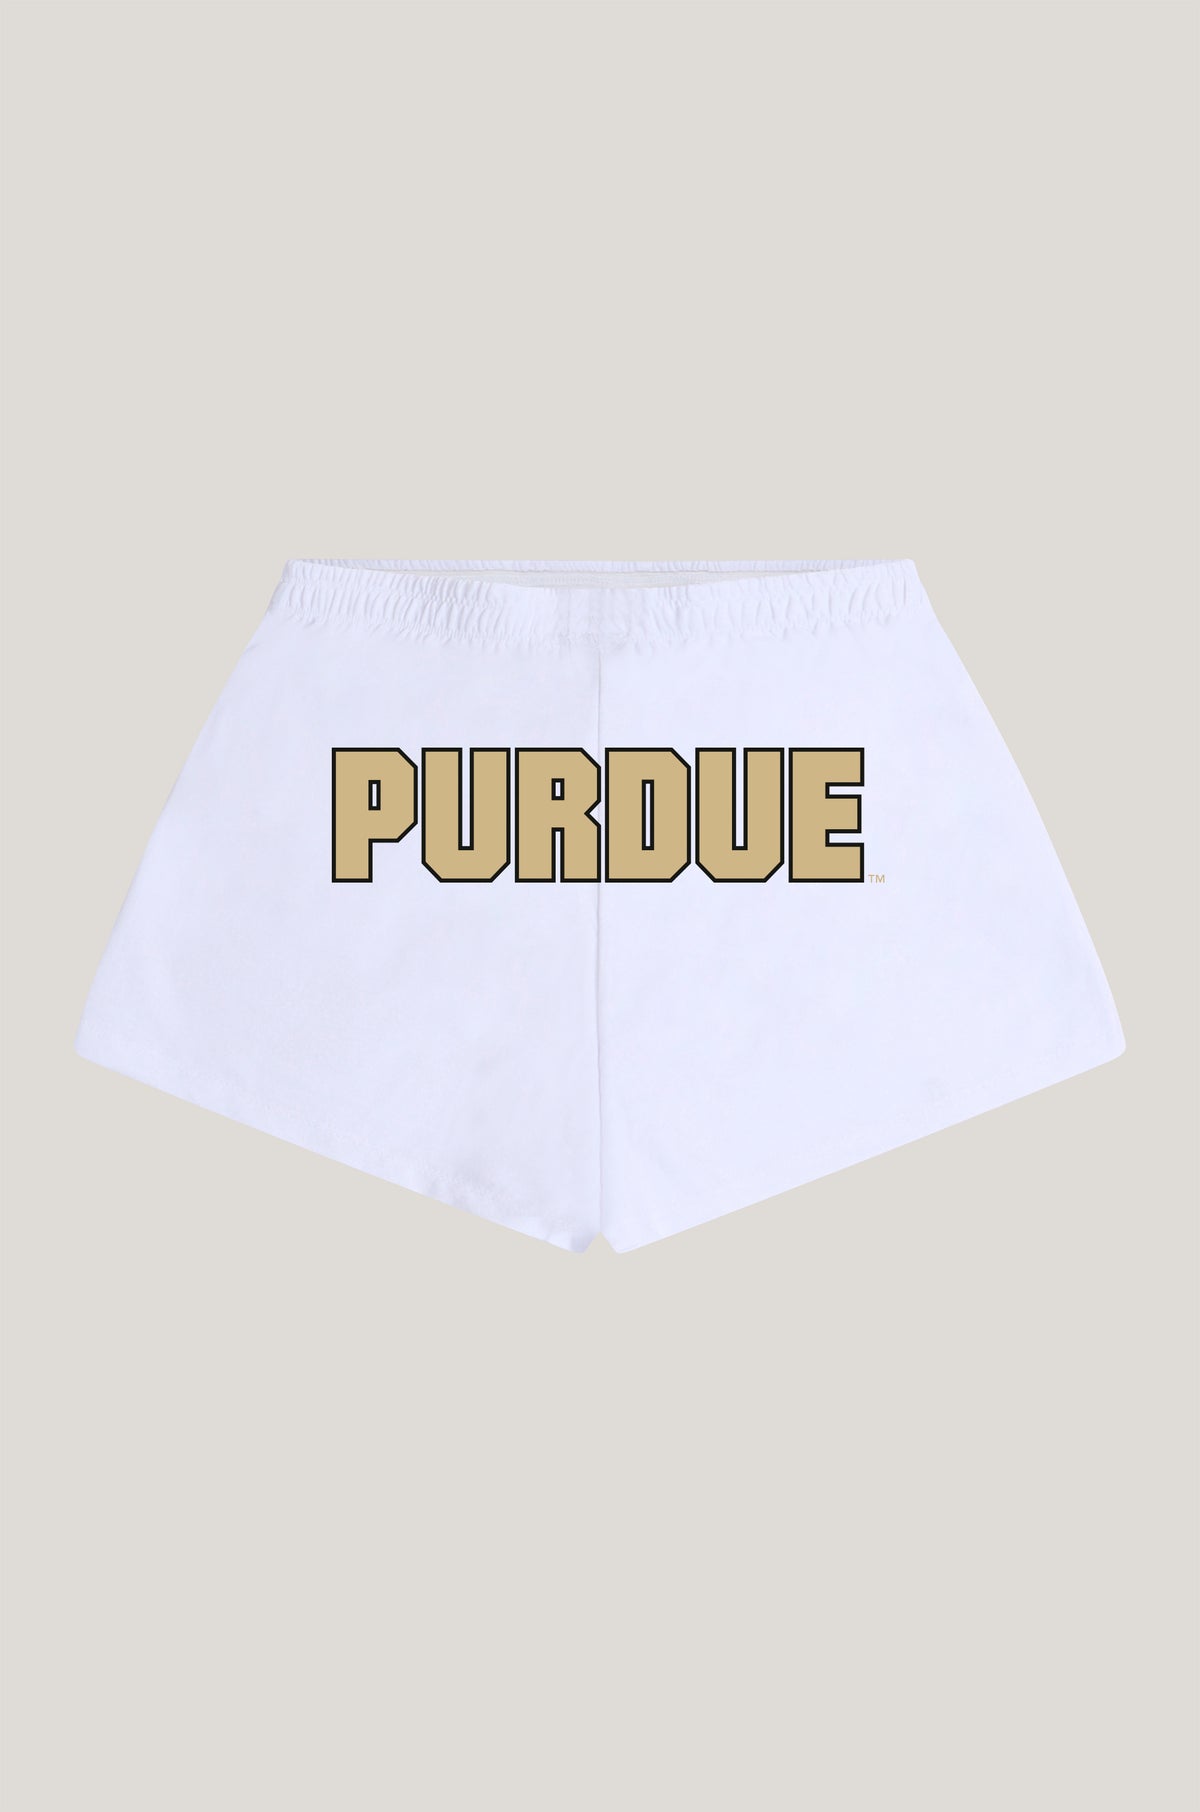 Purdue Soffee Shorts